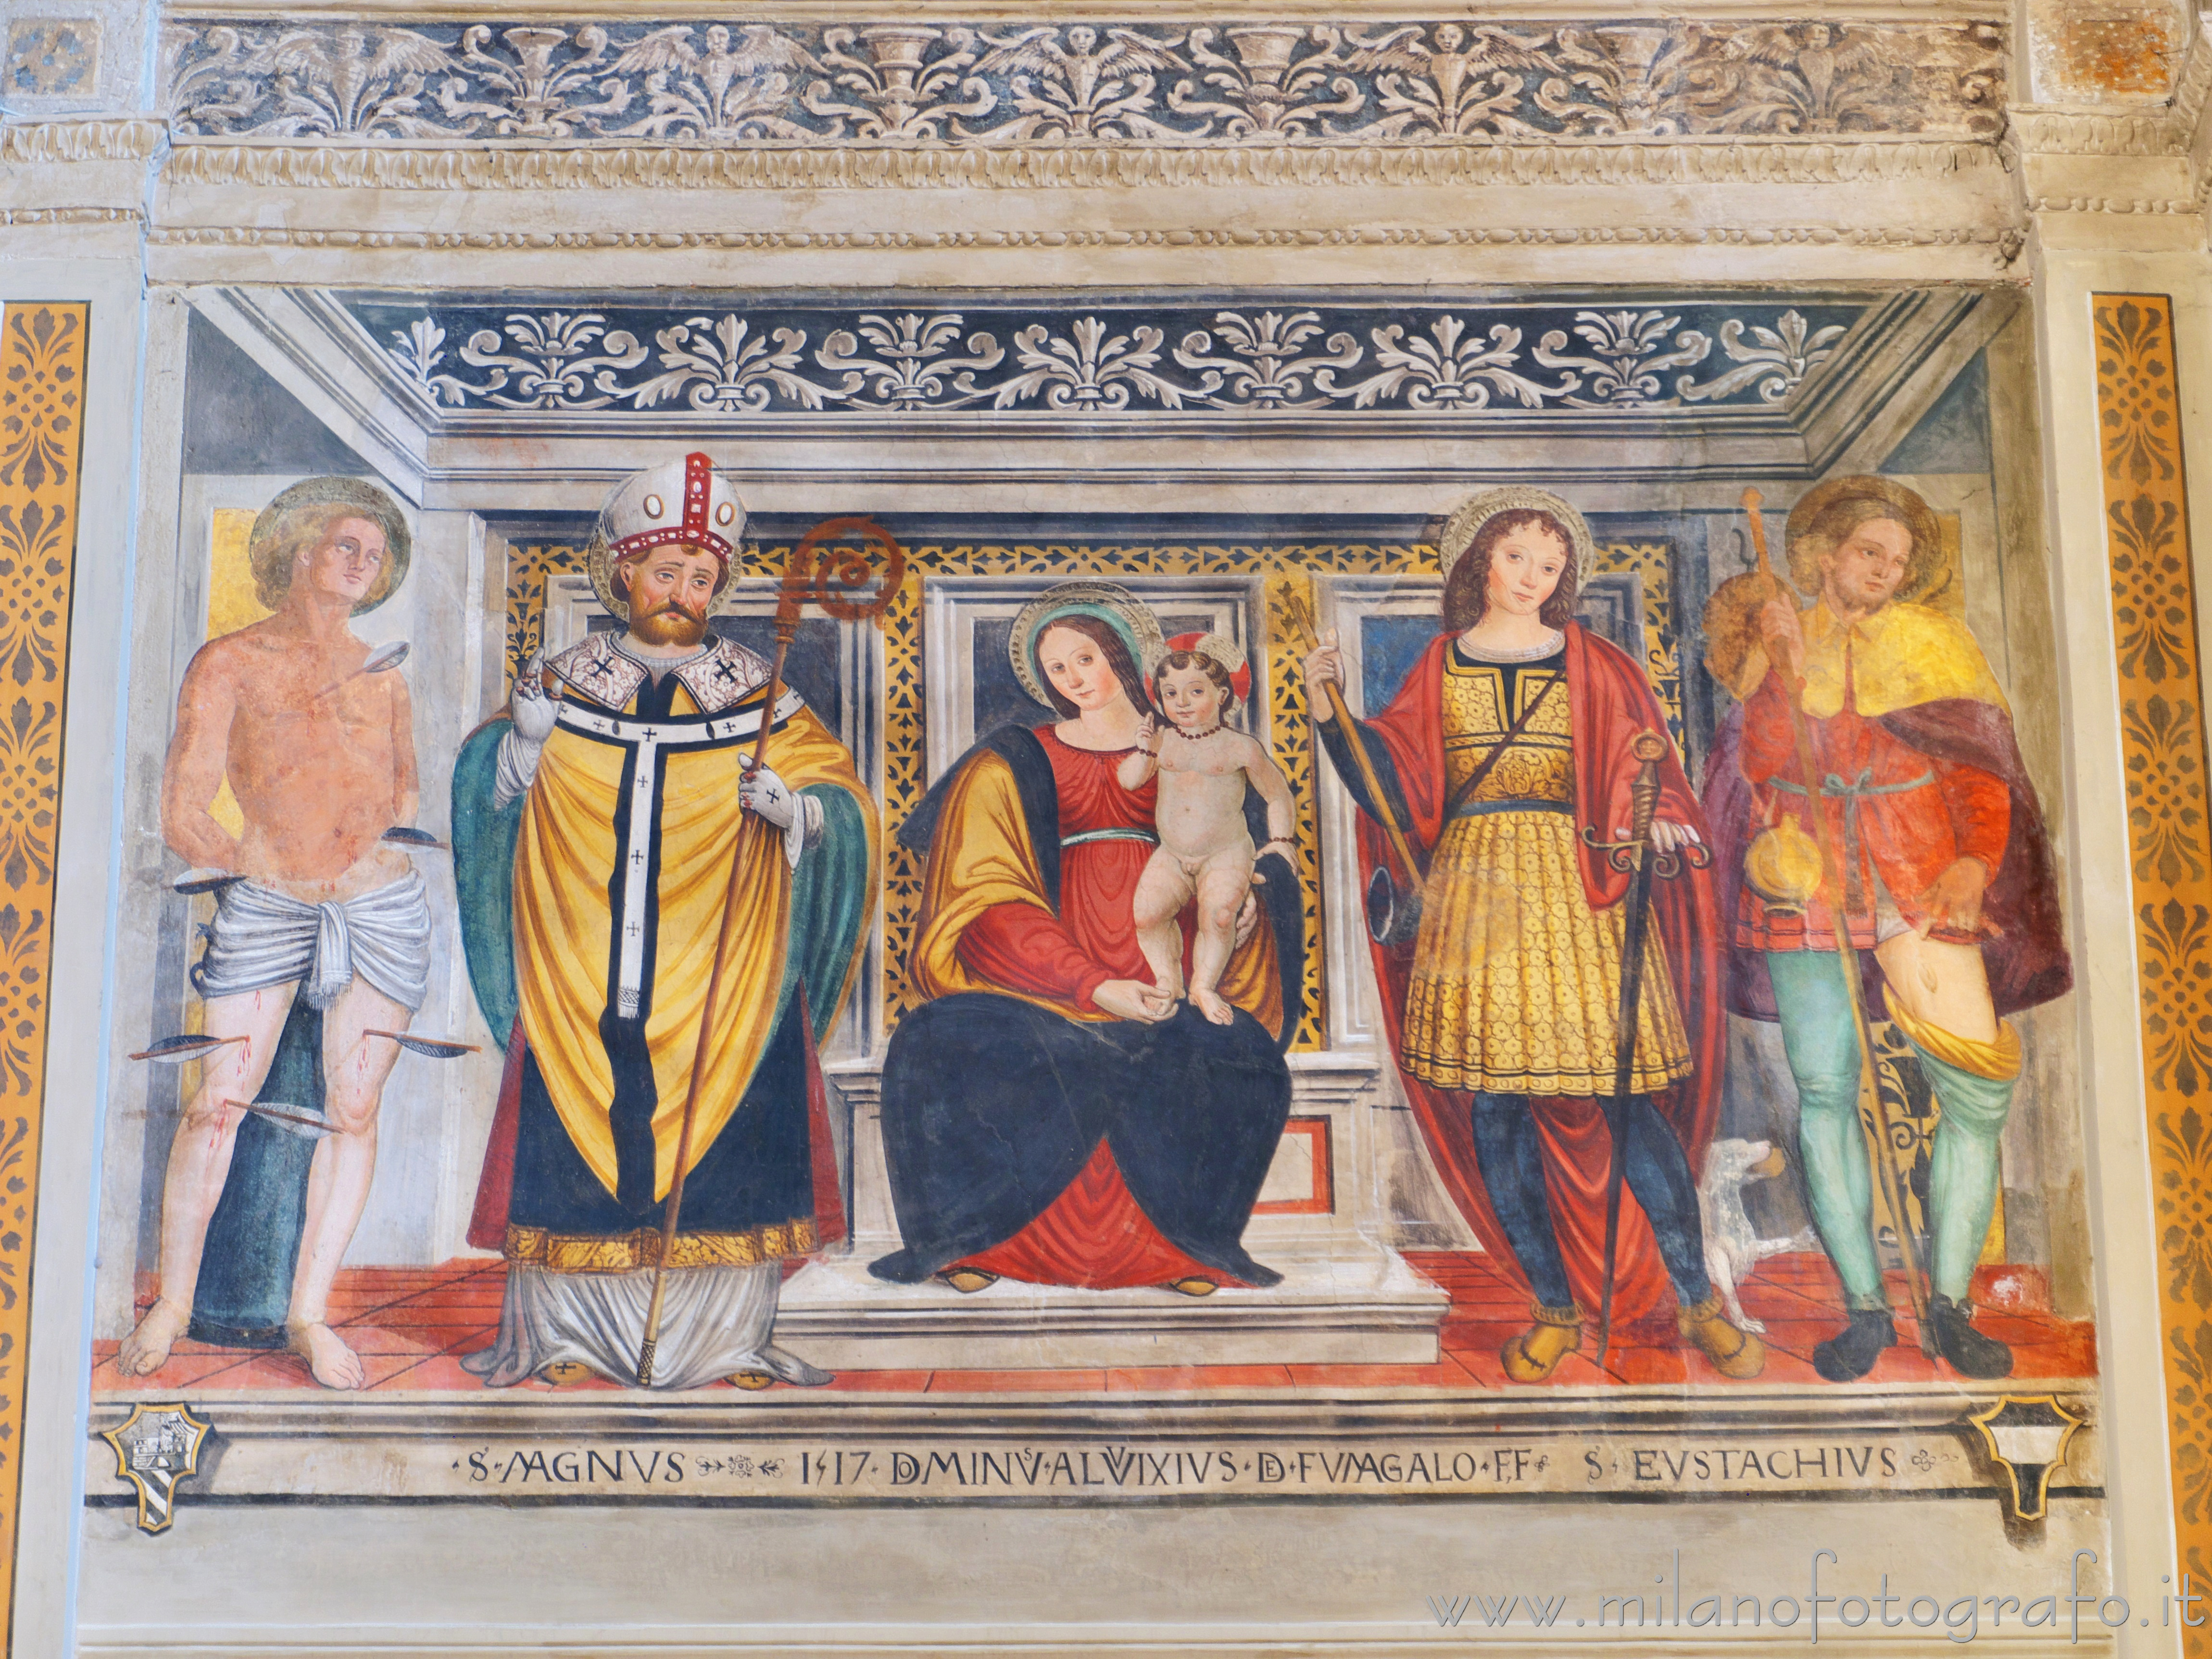 Legnano (Milan, Italy): Frescoes in the Chapel of Saint Agnes in the Basilica of San Magno - Legnano (Milan, Italy)